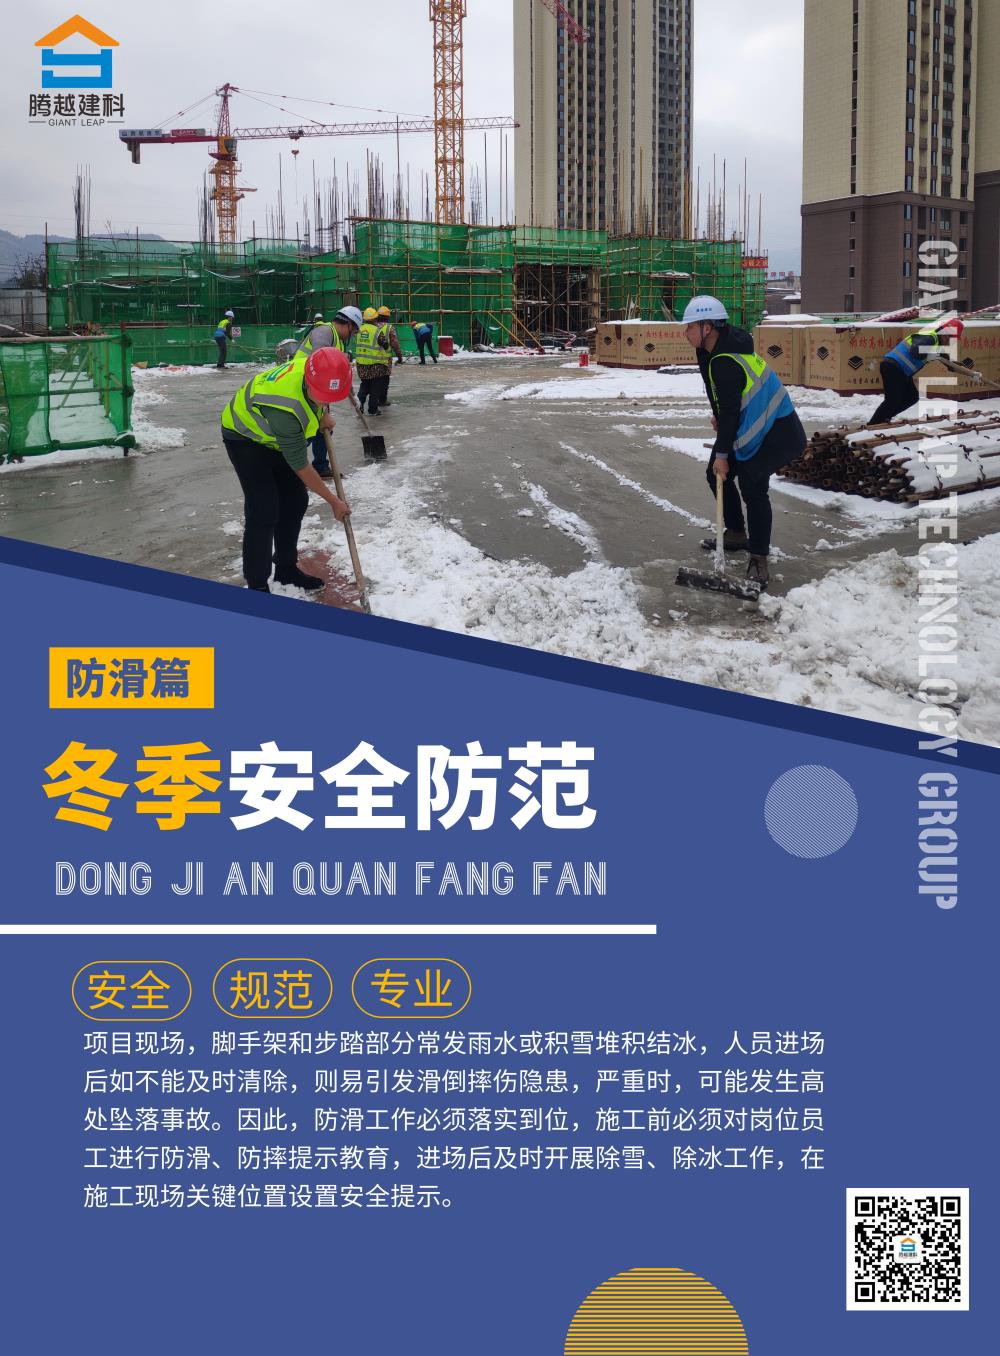 Get干货|中国网投app有限公司建科集团冬季安全建设有妙招 